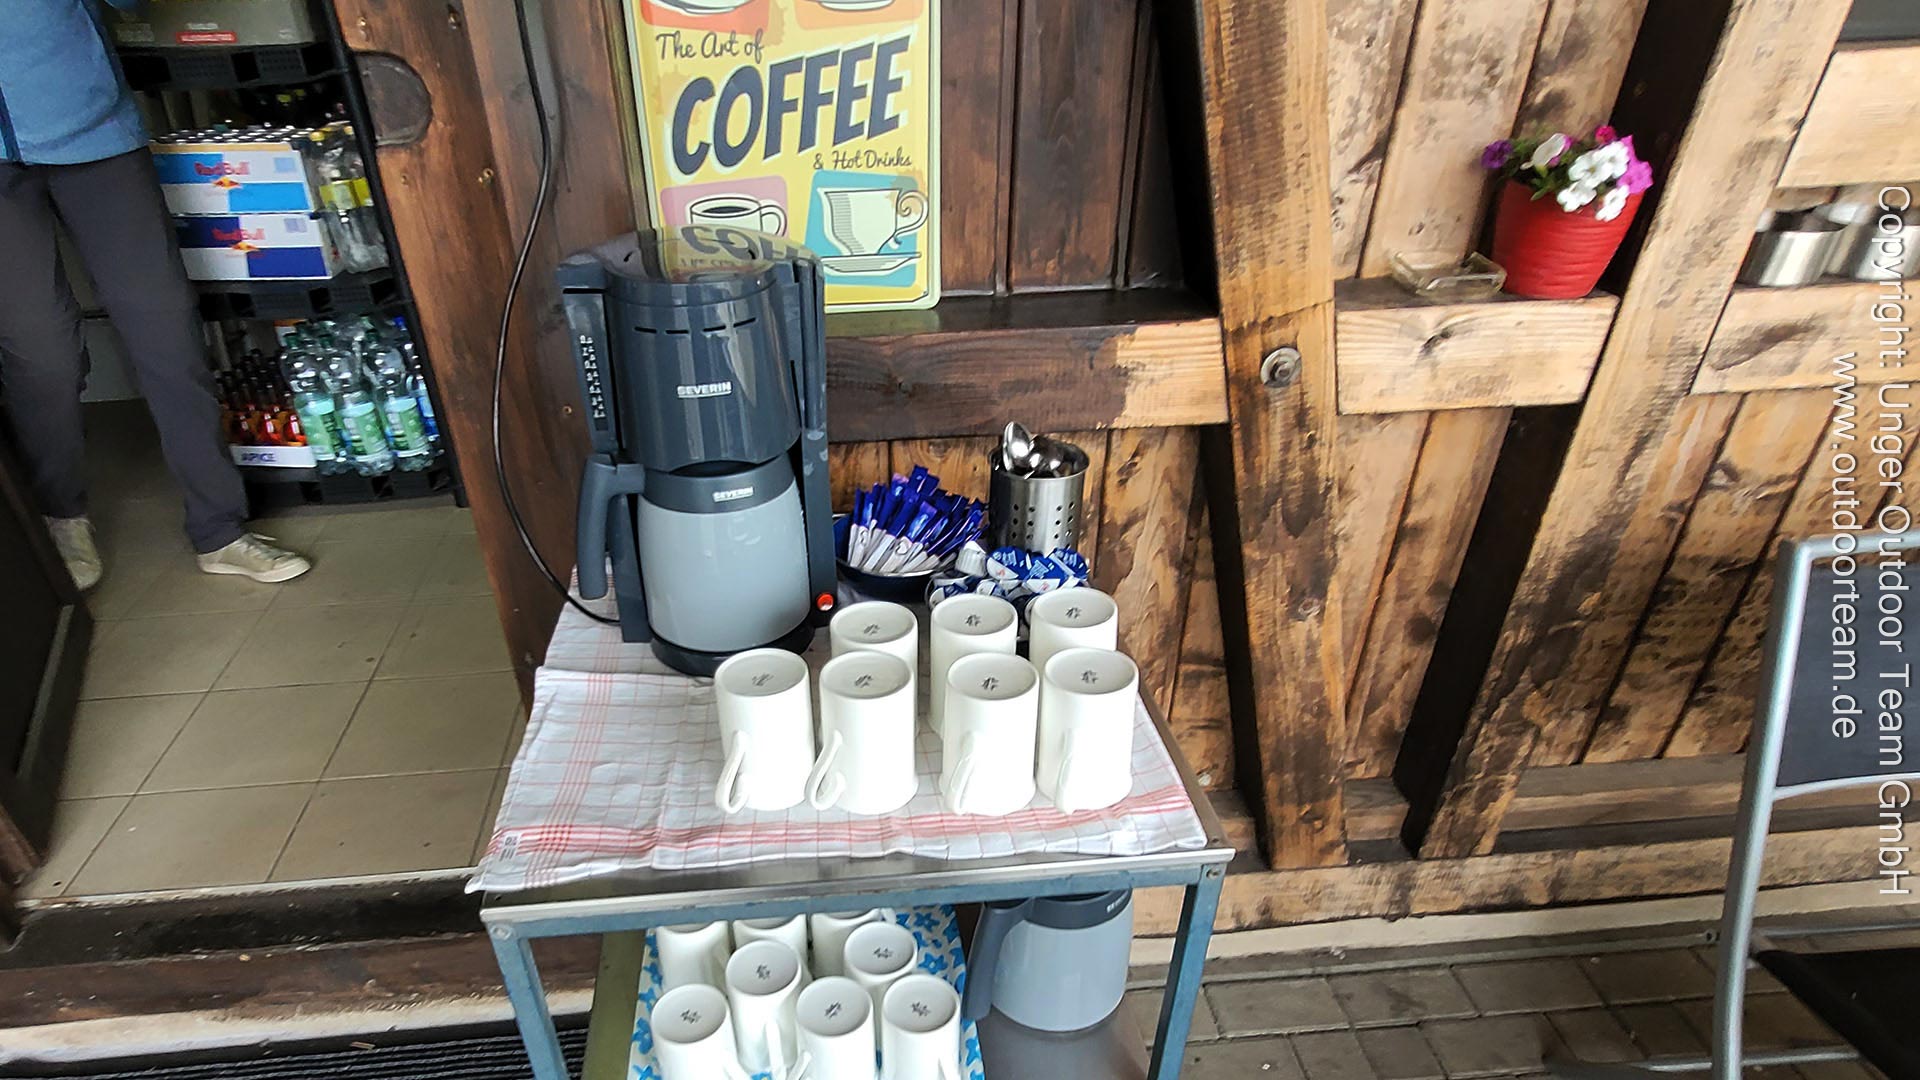 starker Kaffee so viel man möchte - Kaffee-Kuchen-Tour an der Raststätte in Wiesenthal am Ufer der Freiberger Mulde